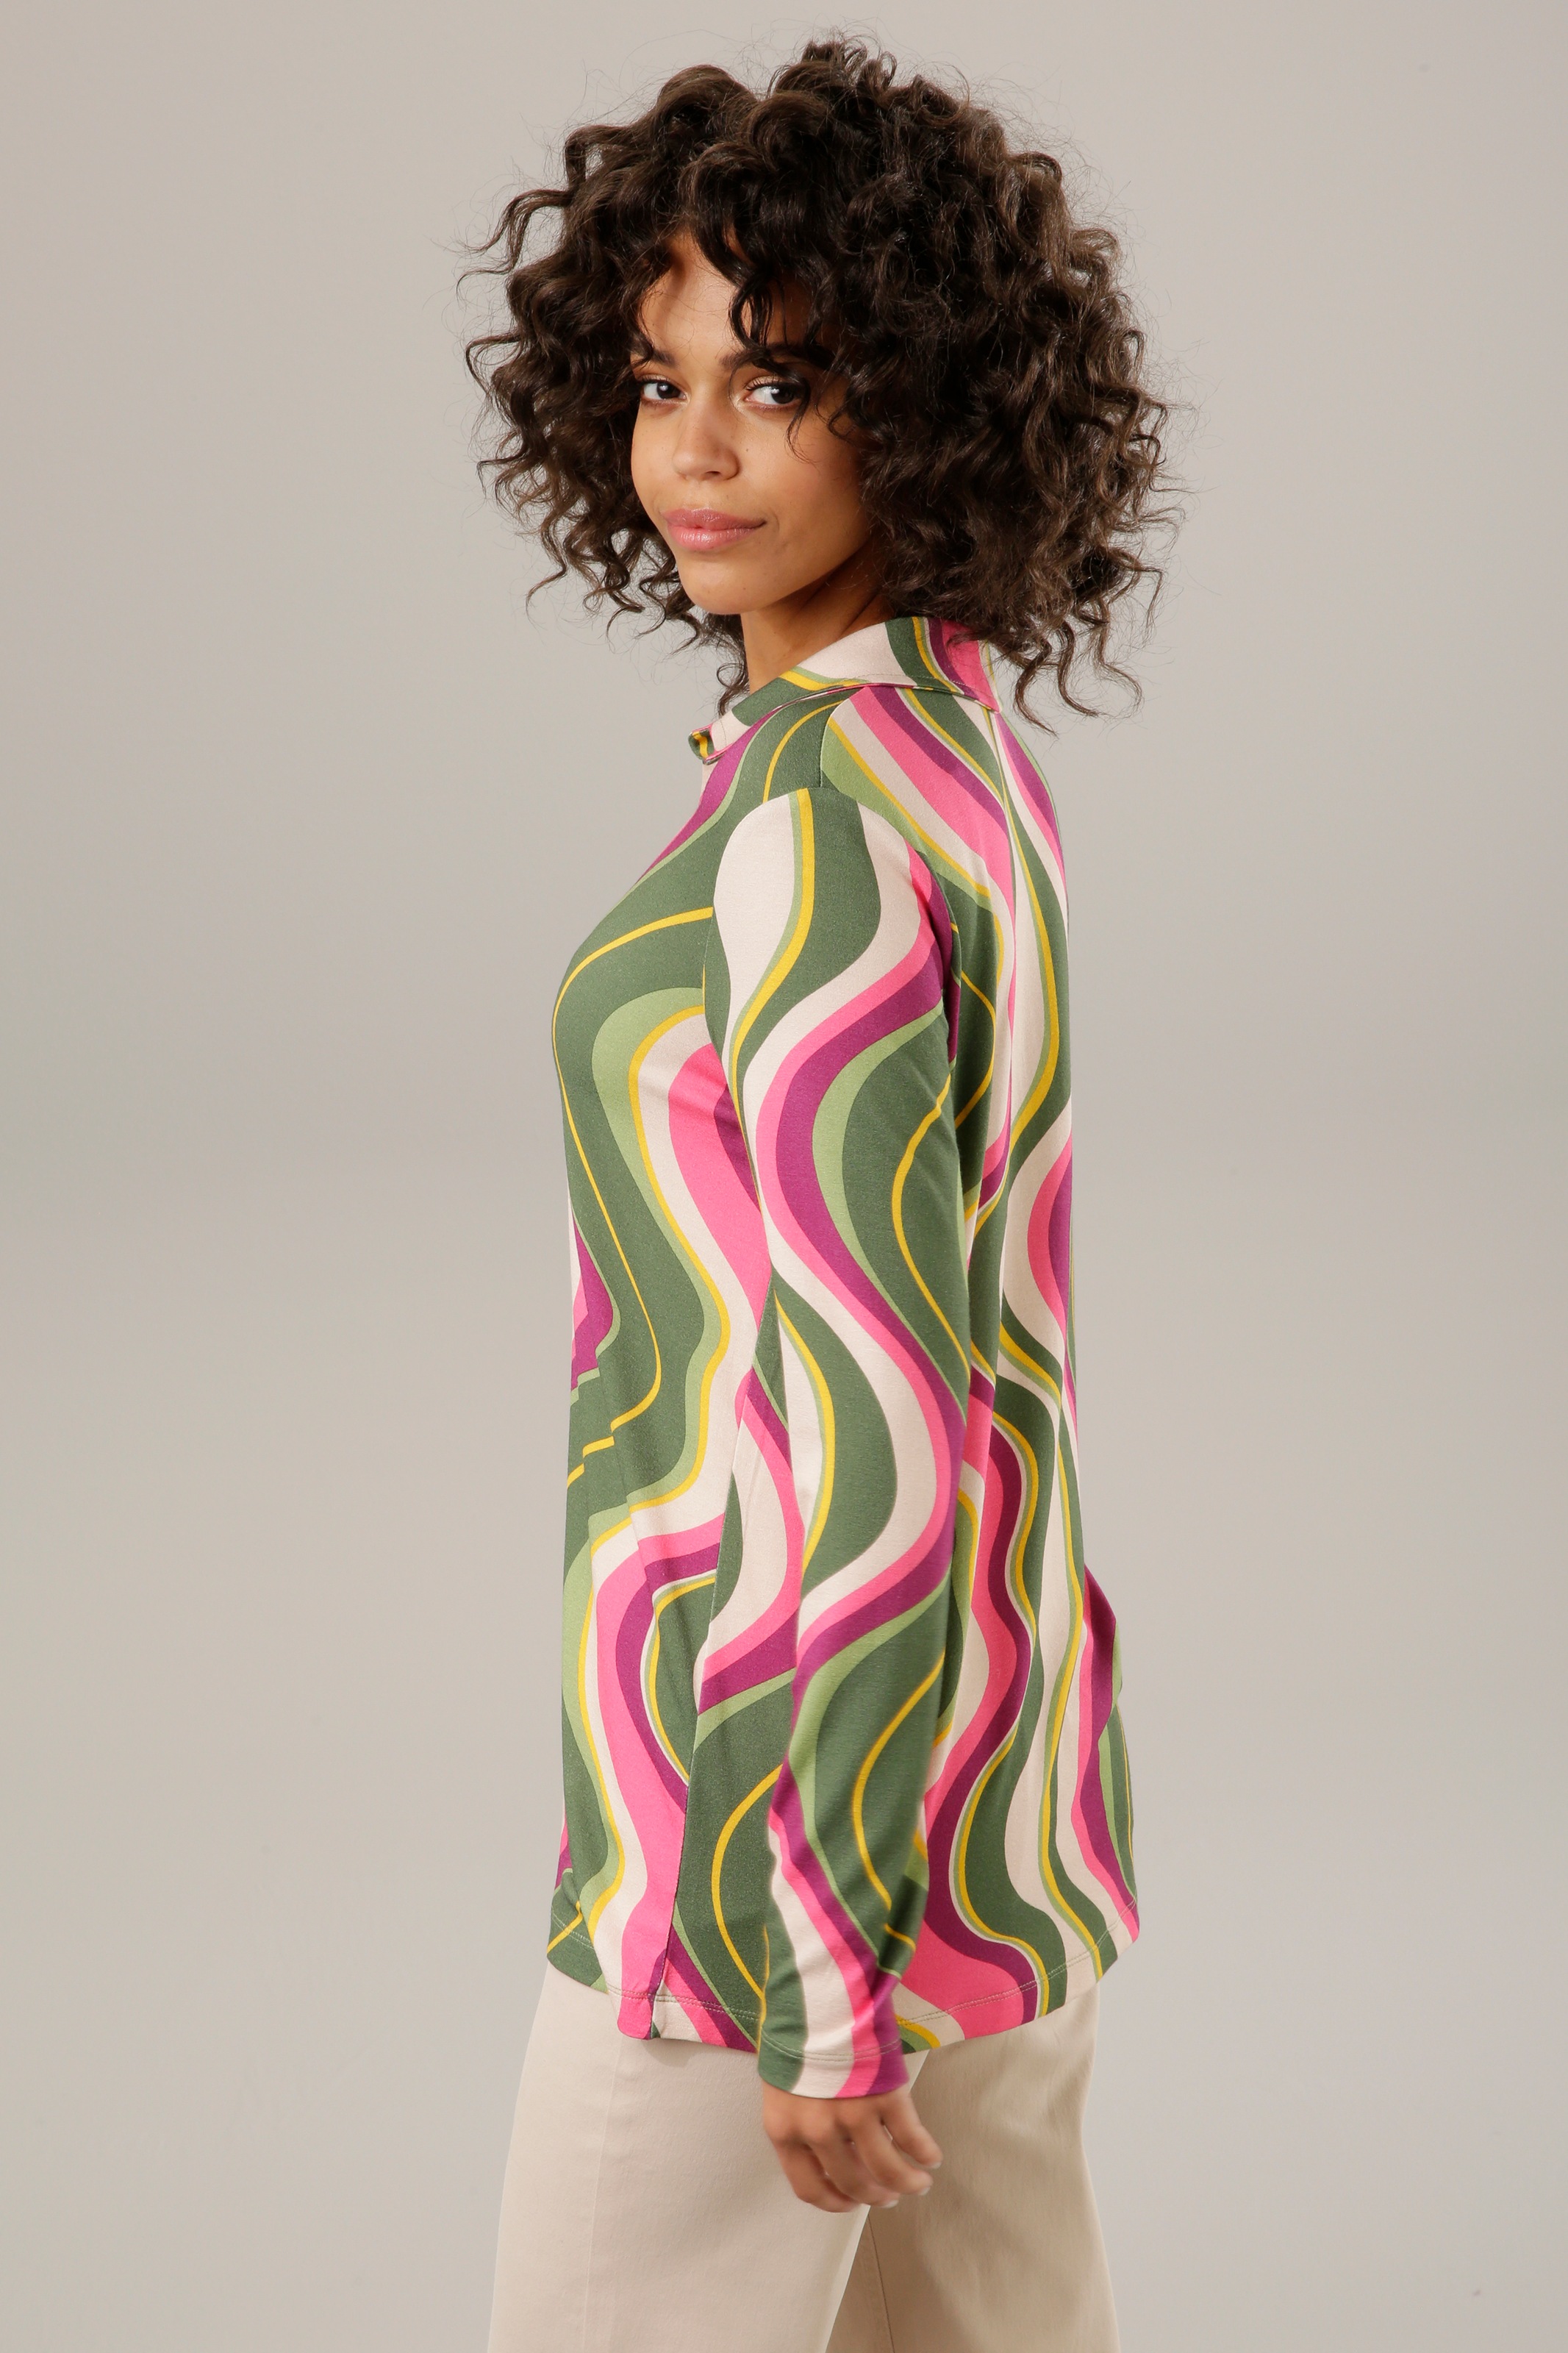 Aniston CASUAL Shirtbluse, farbenfrohes Wellenmuster - jedes Teil ein  Unikat online bei OTTO